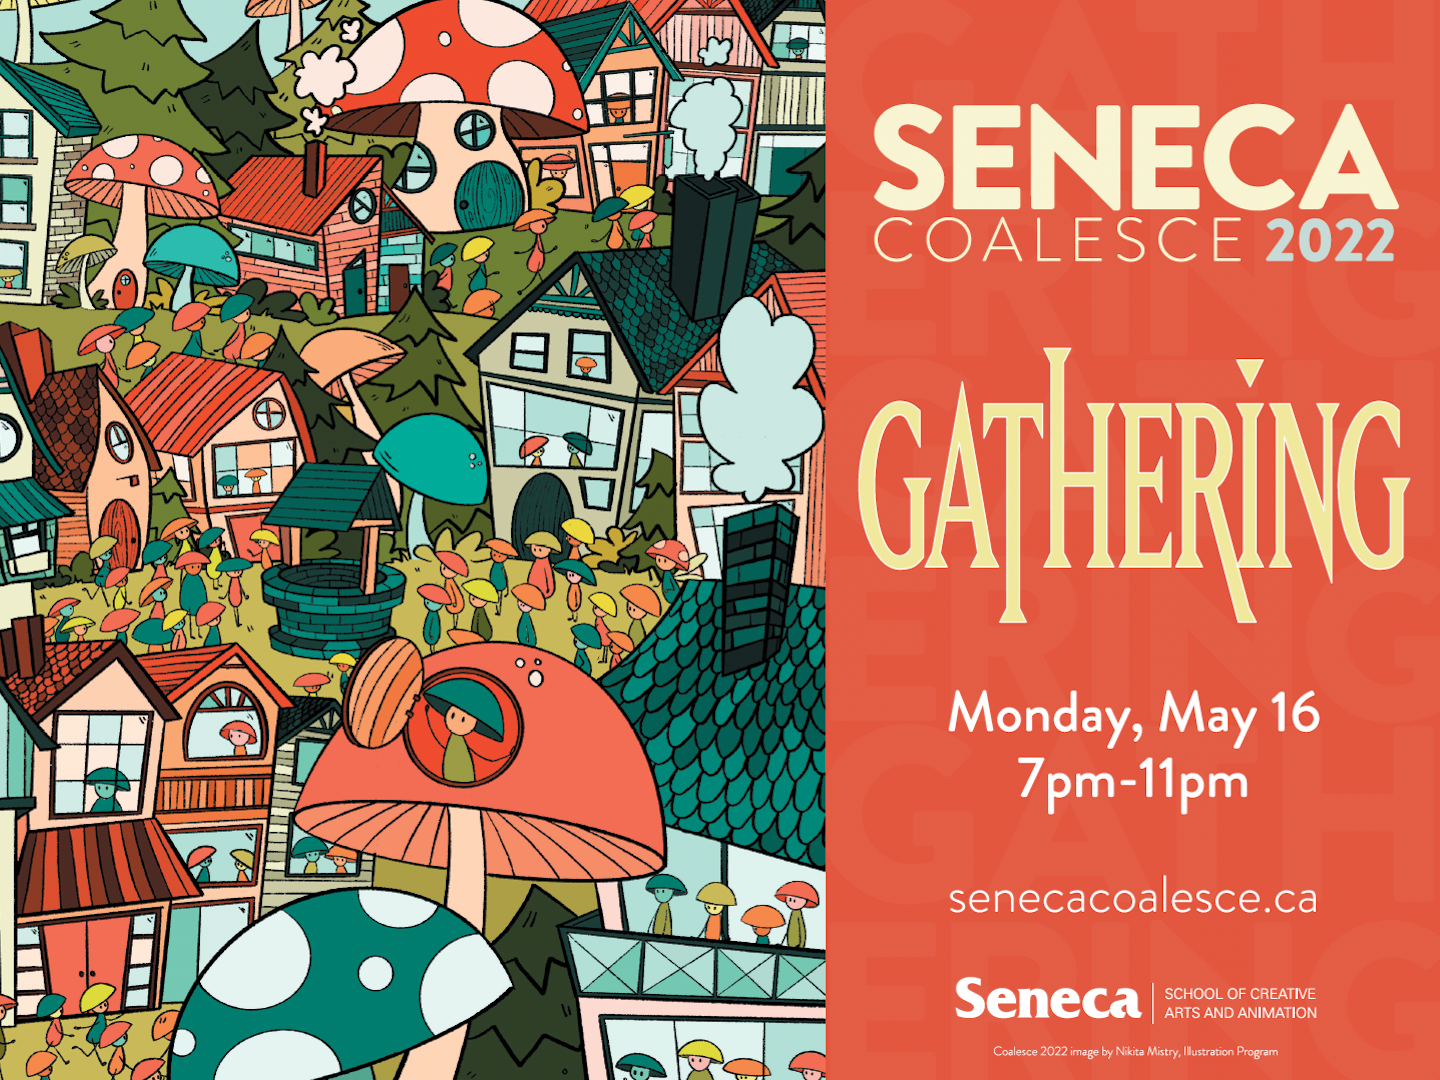 Attend the Seneca Coalesce 2022 showcase